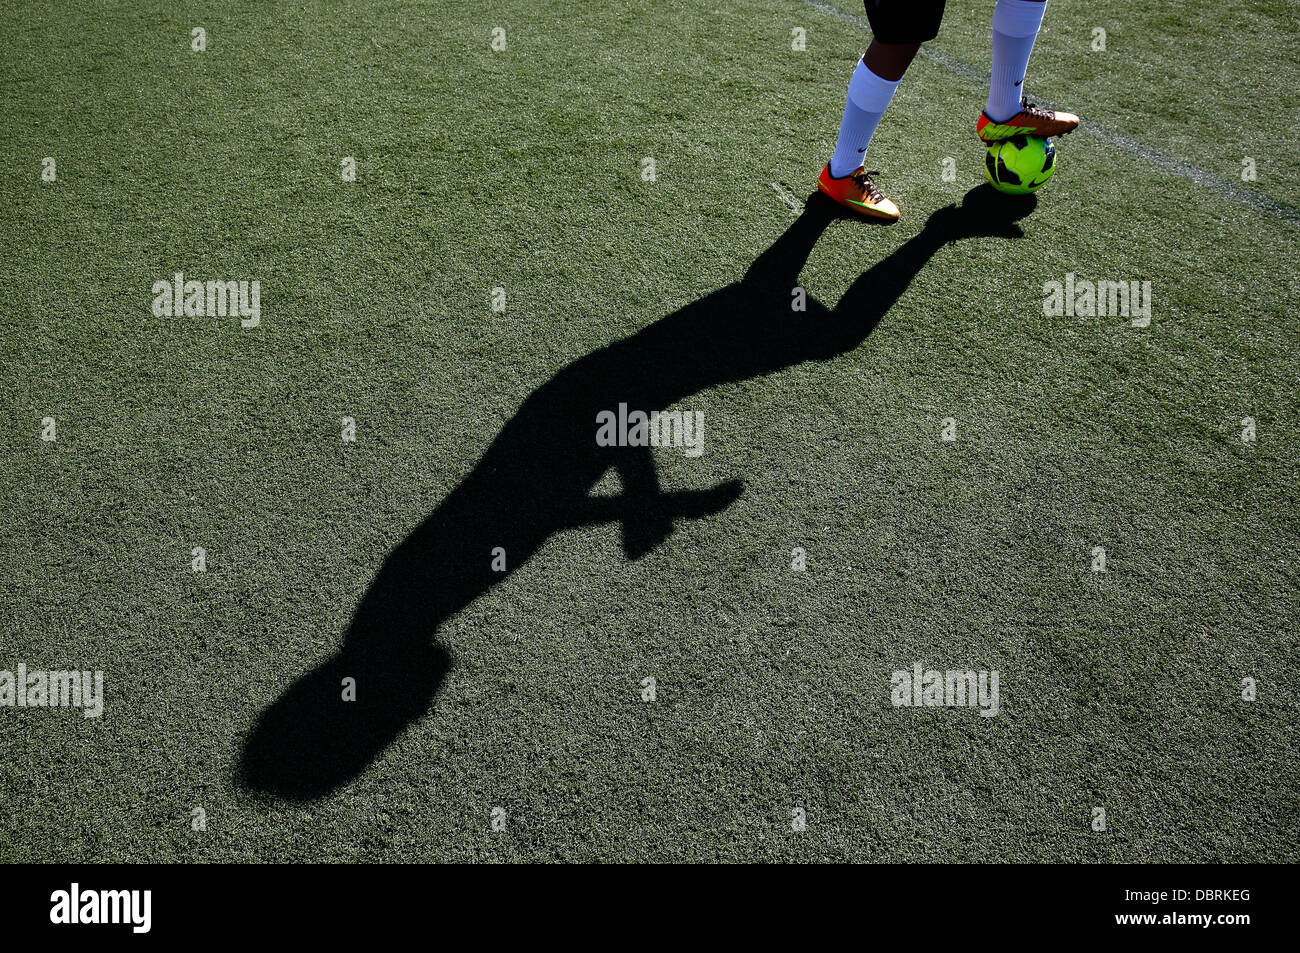 soccer ball feet shadow Stock Photo